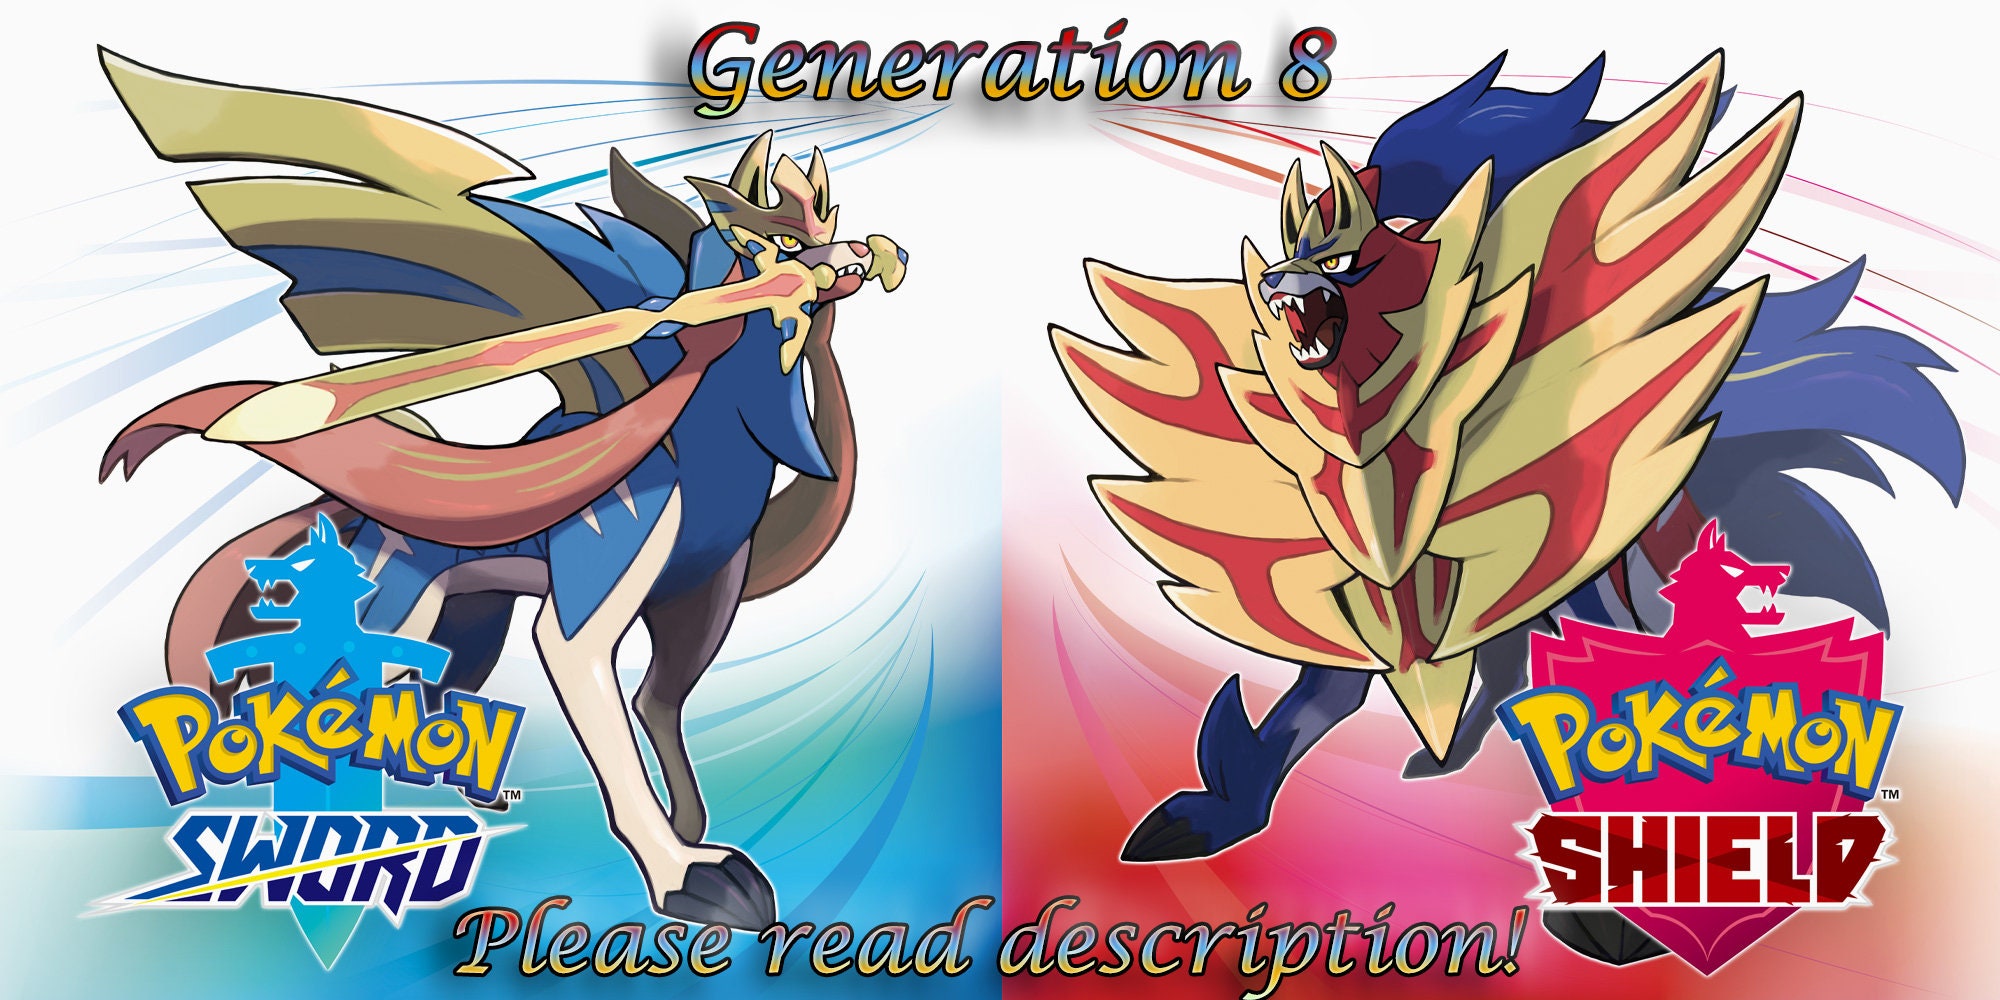 Shiny Generation 8 Pokemon Sword/shield switch Fast Etsy Israel